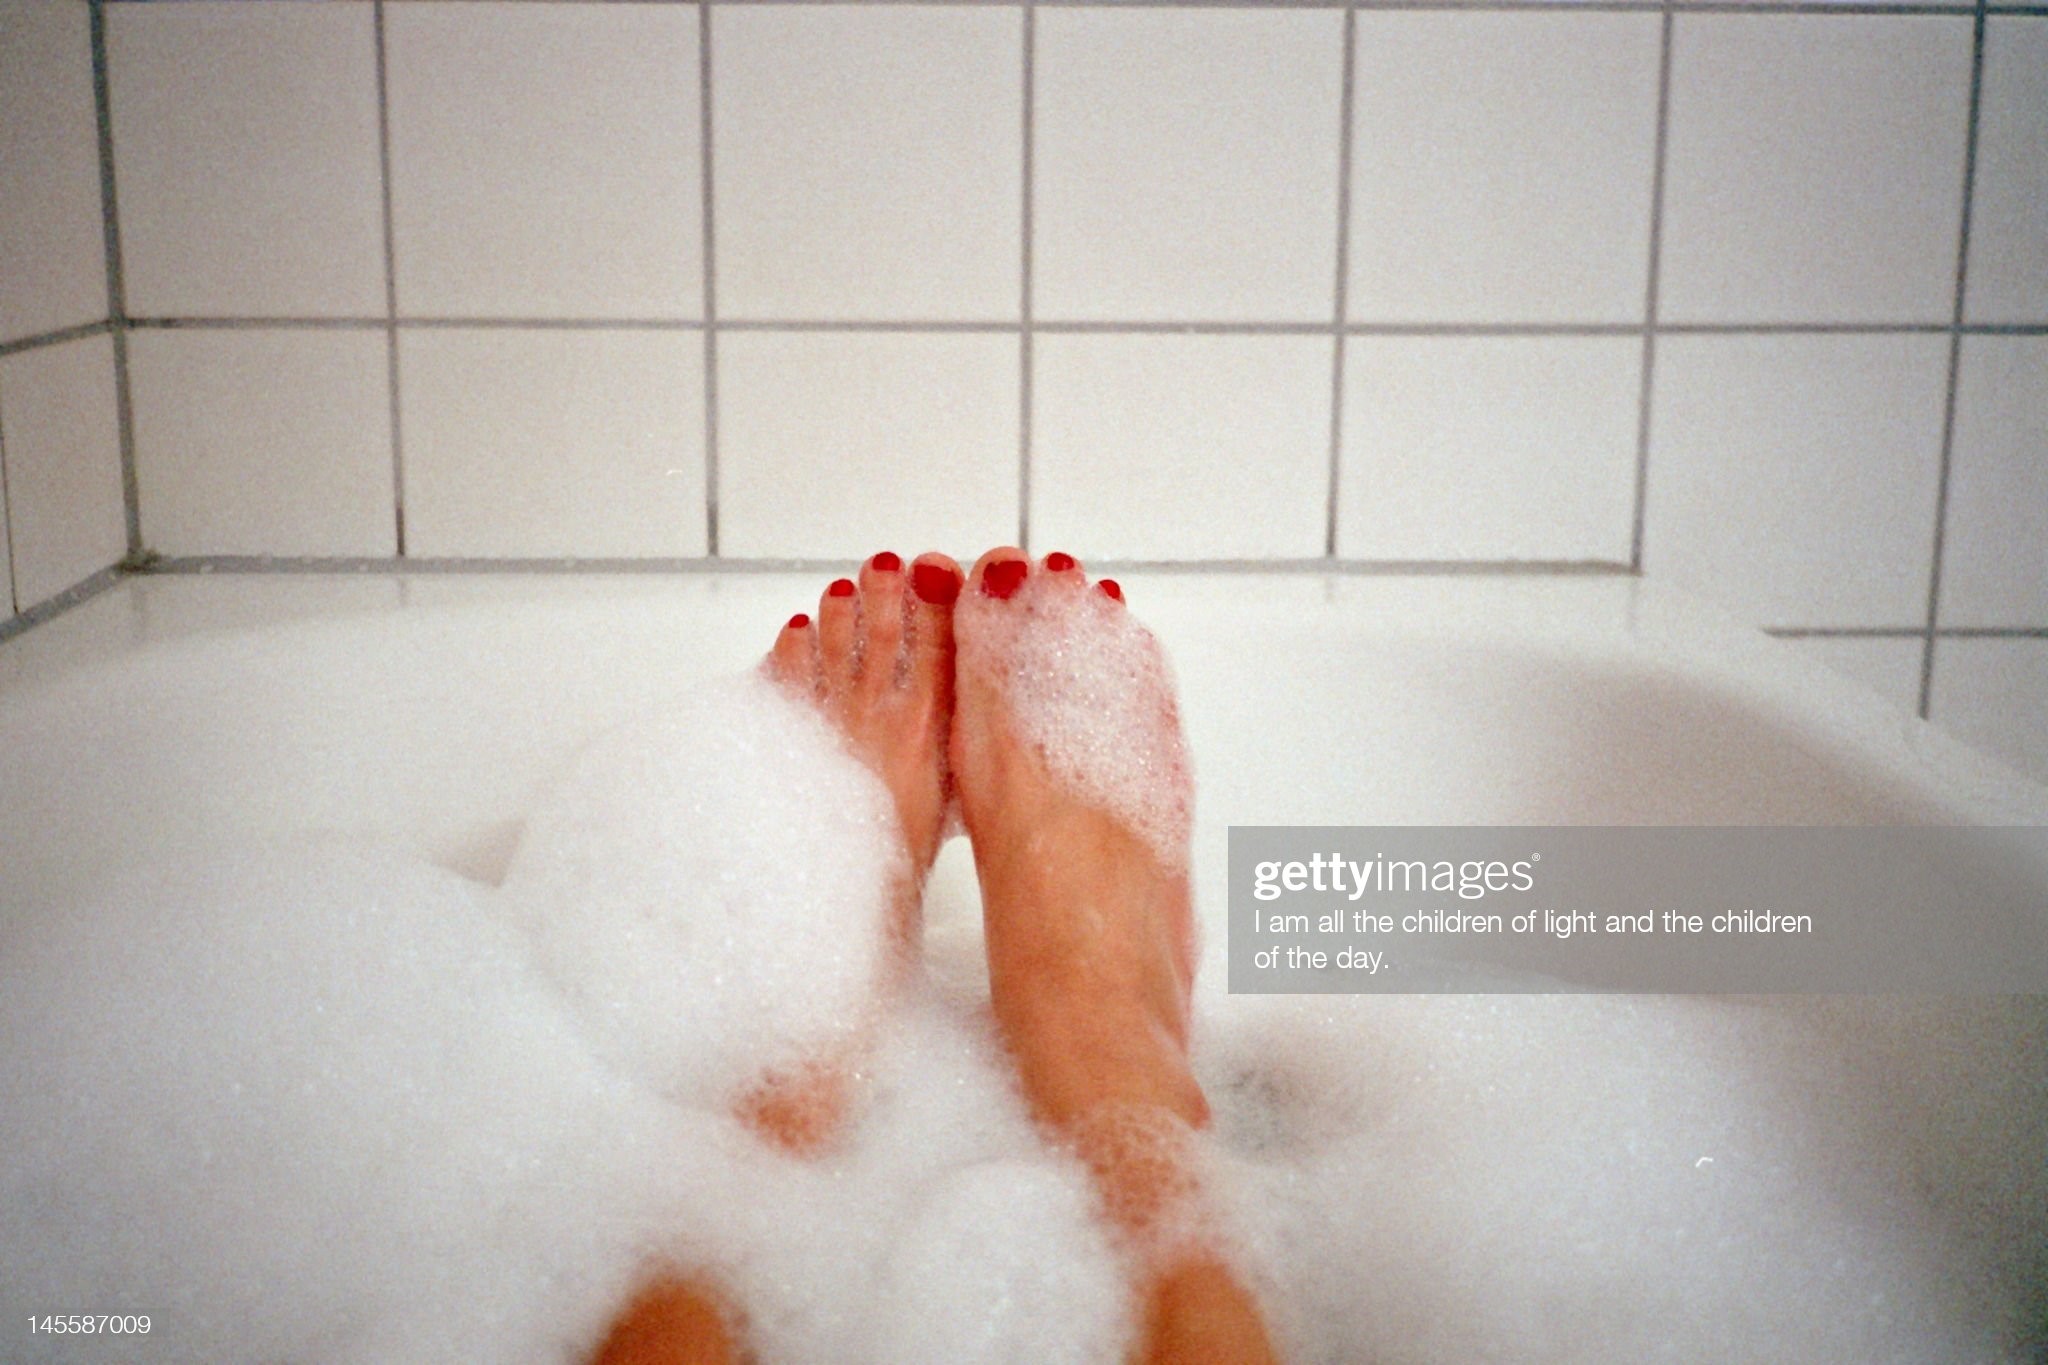 German woman's leg inside bathtub.